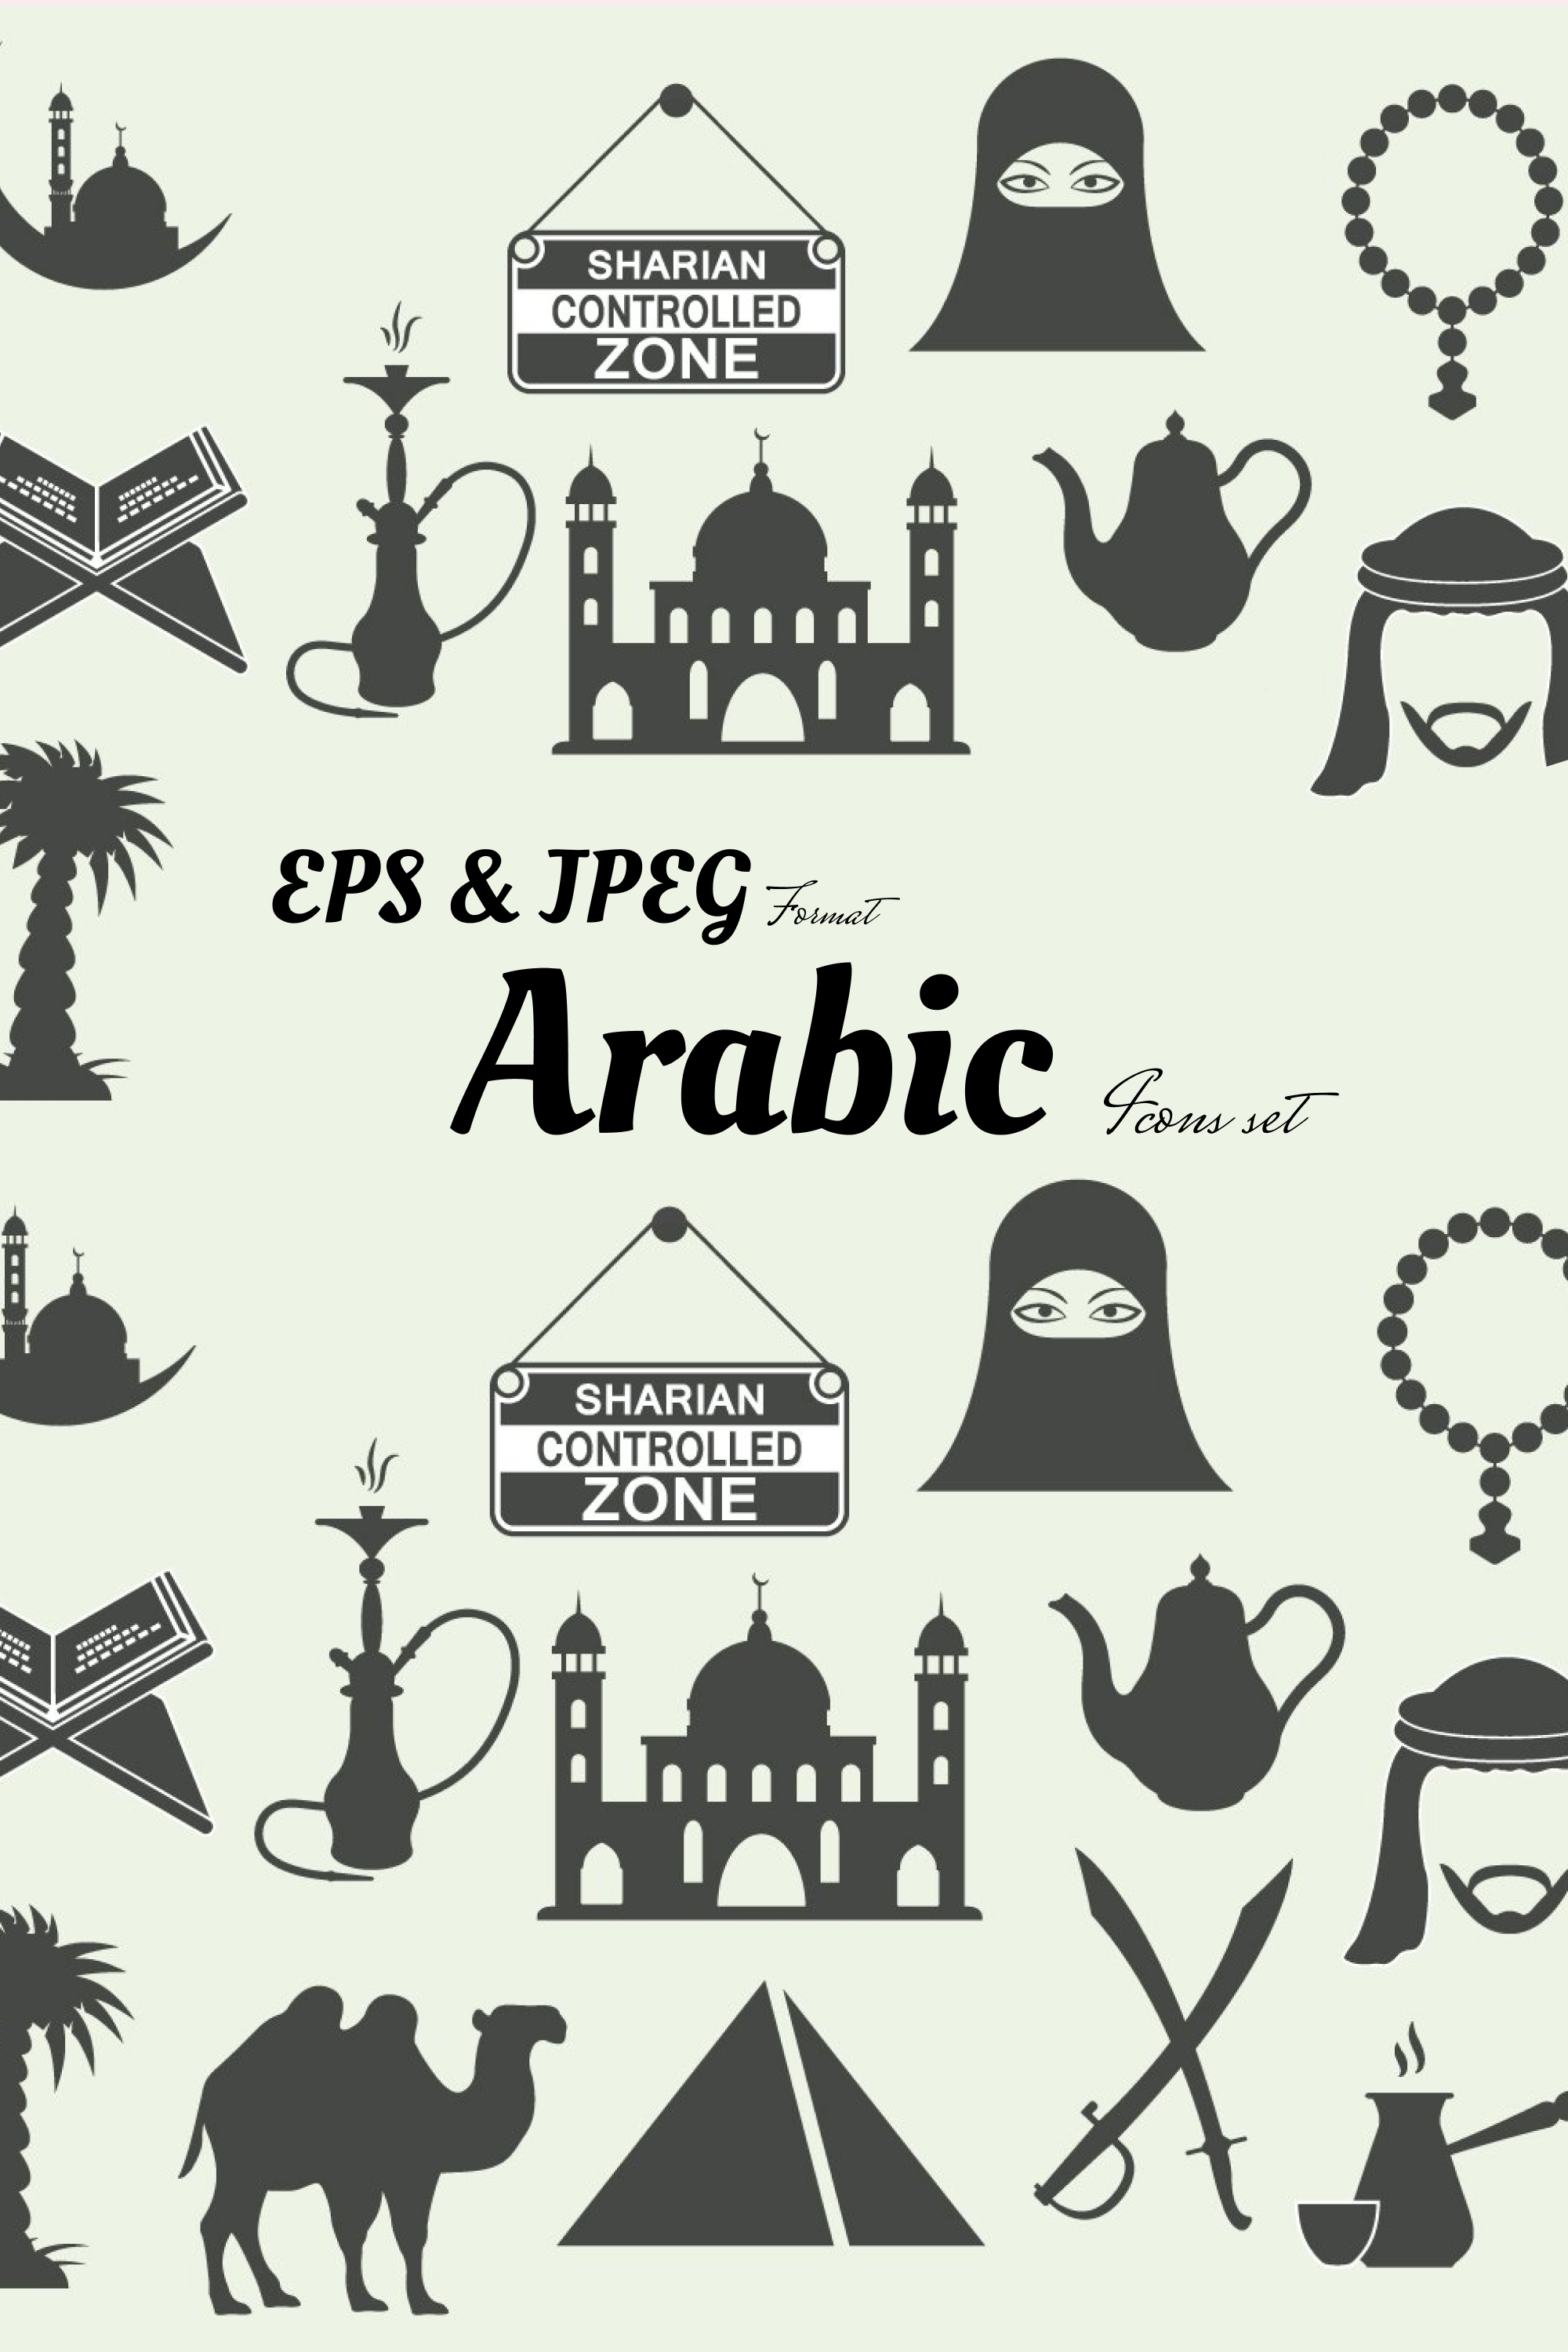 Arabic icons set of pinterest.